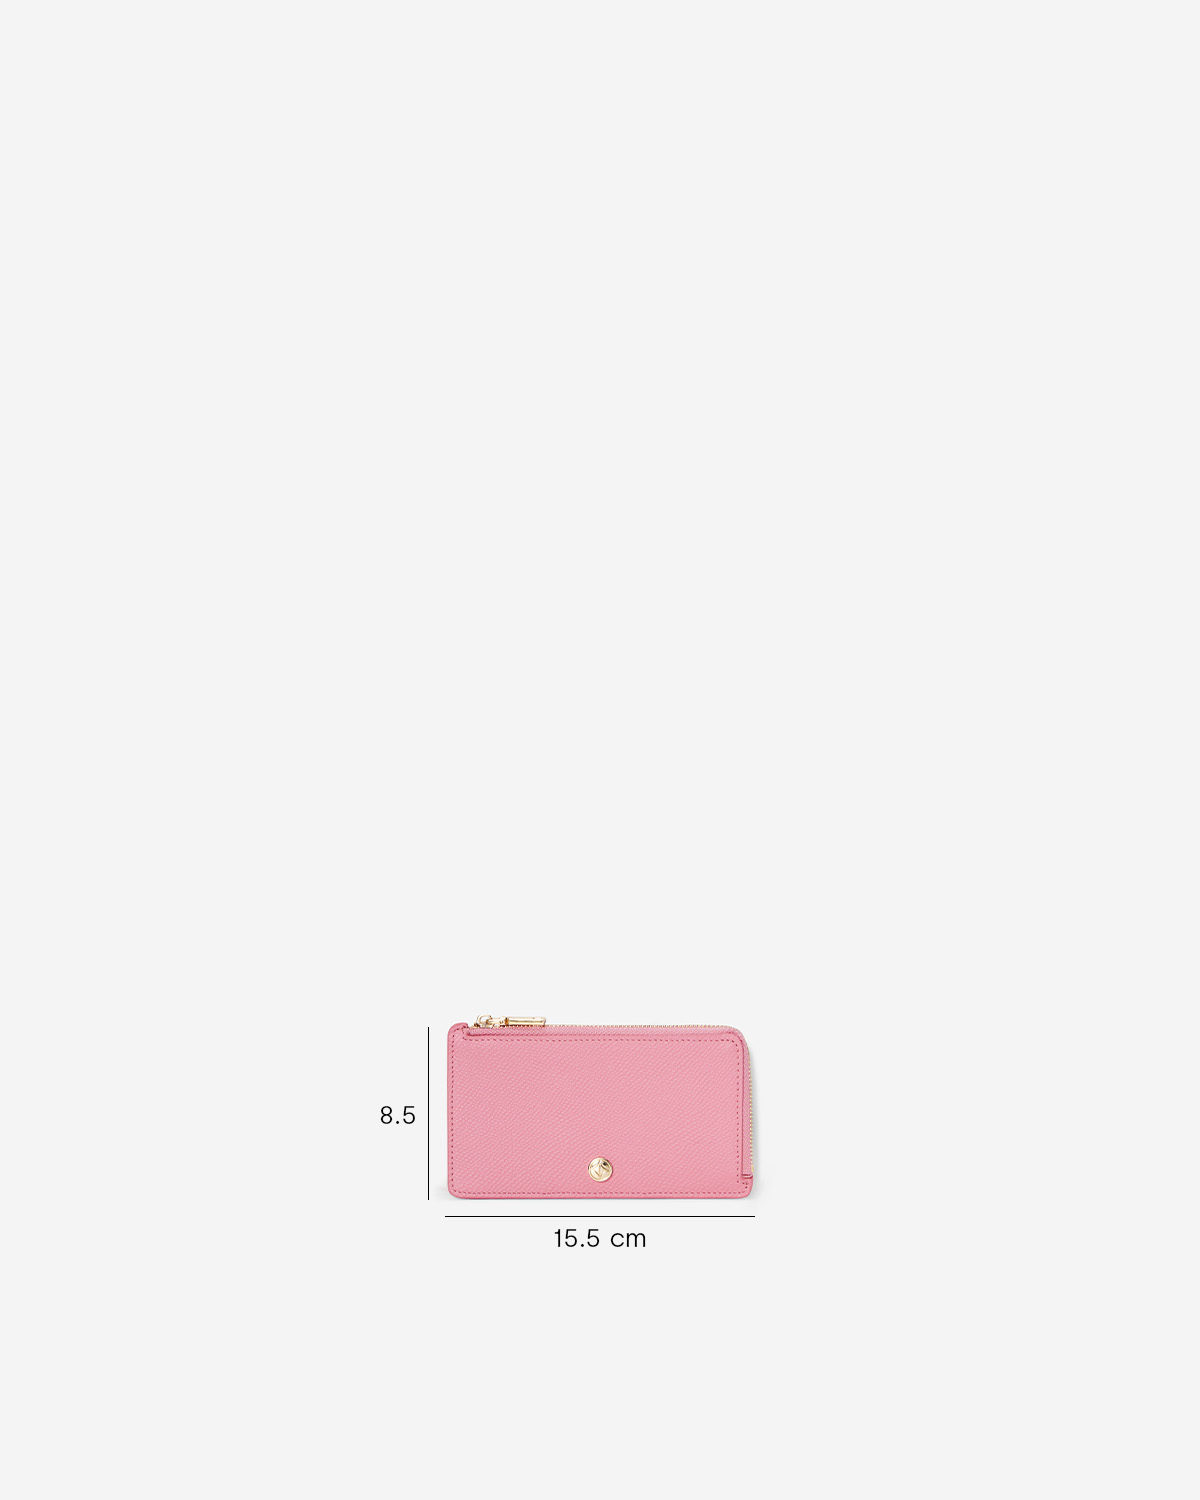 VERA Emily Long Card holder in Creative Pink กระเป๋าใส่บัตรหนังแท้ ทรงยาว พร้อมช่องซิบ สีชมพู